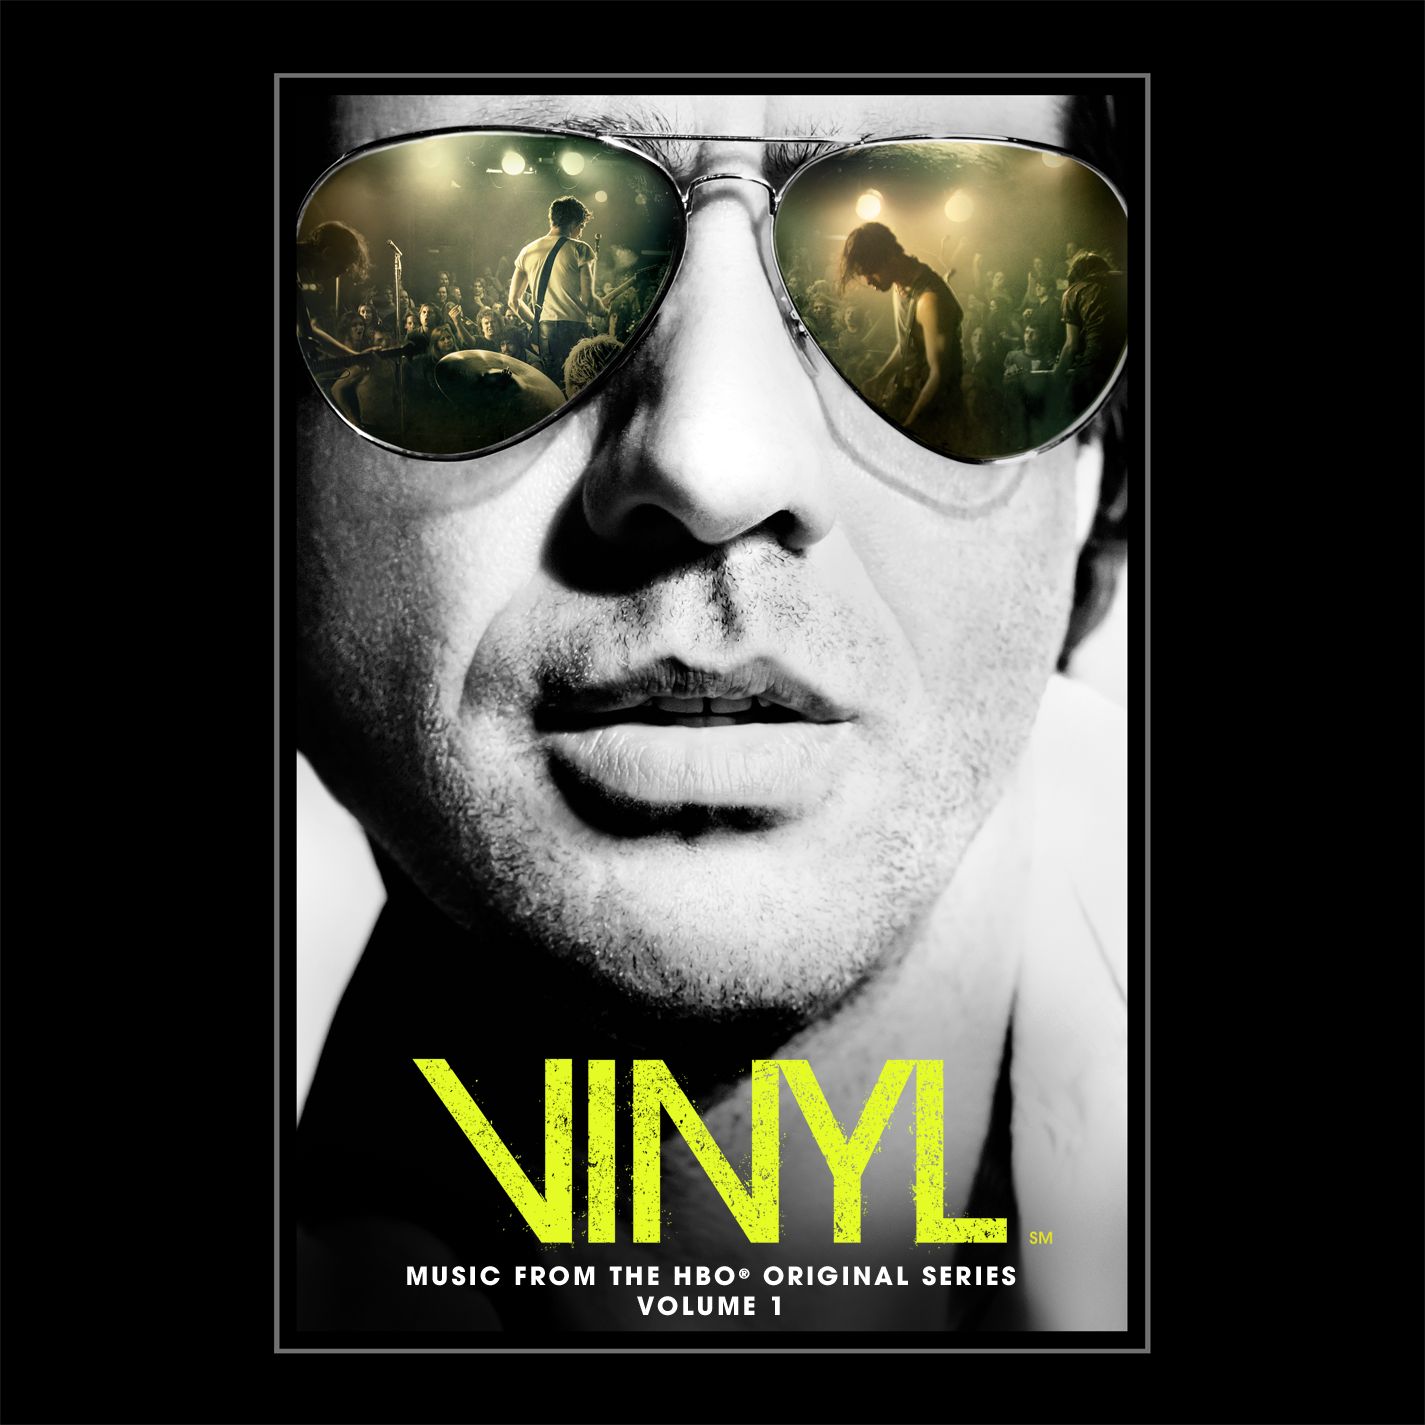 VINYL: Music From The HBO Original Series 1 Digital Album | Warner Music Official Store